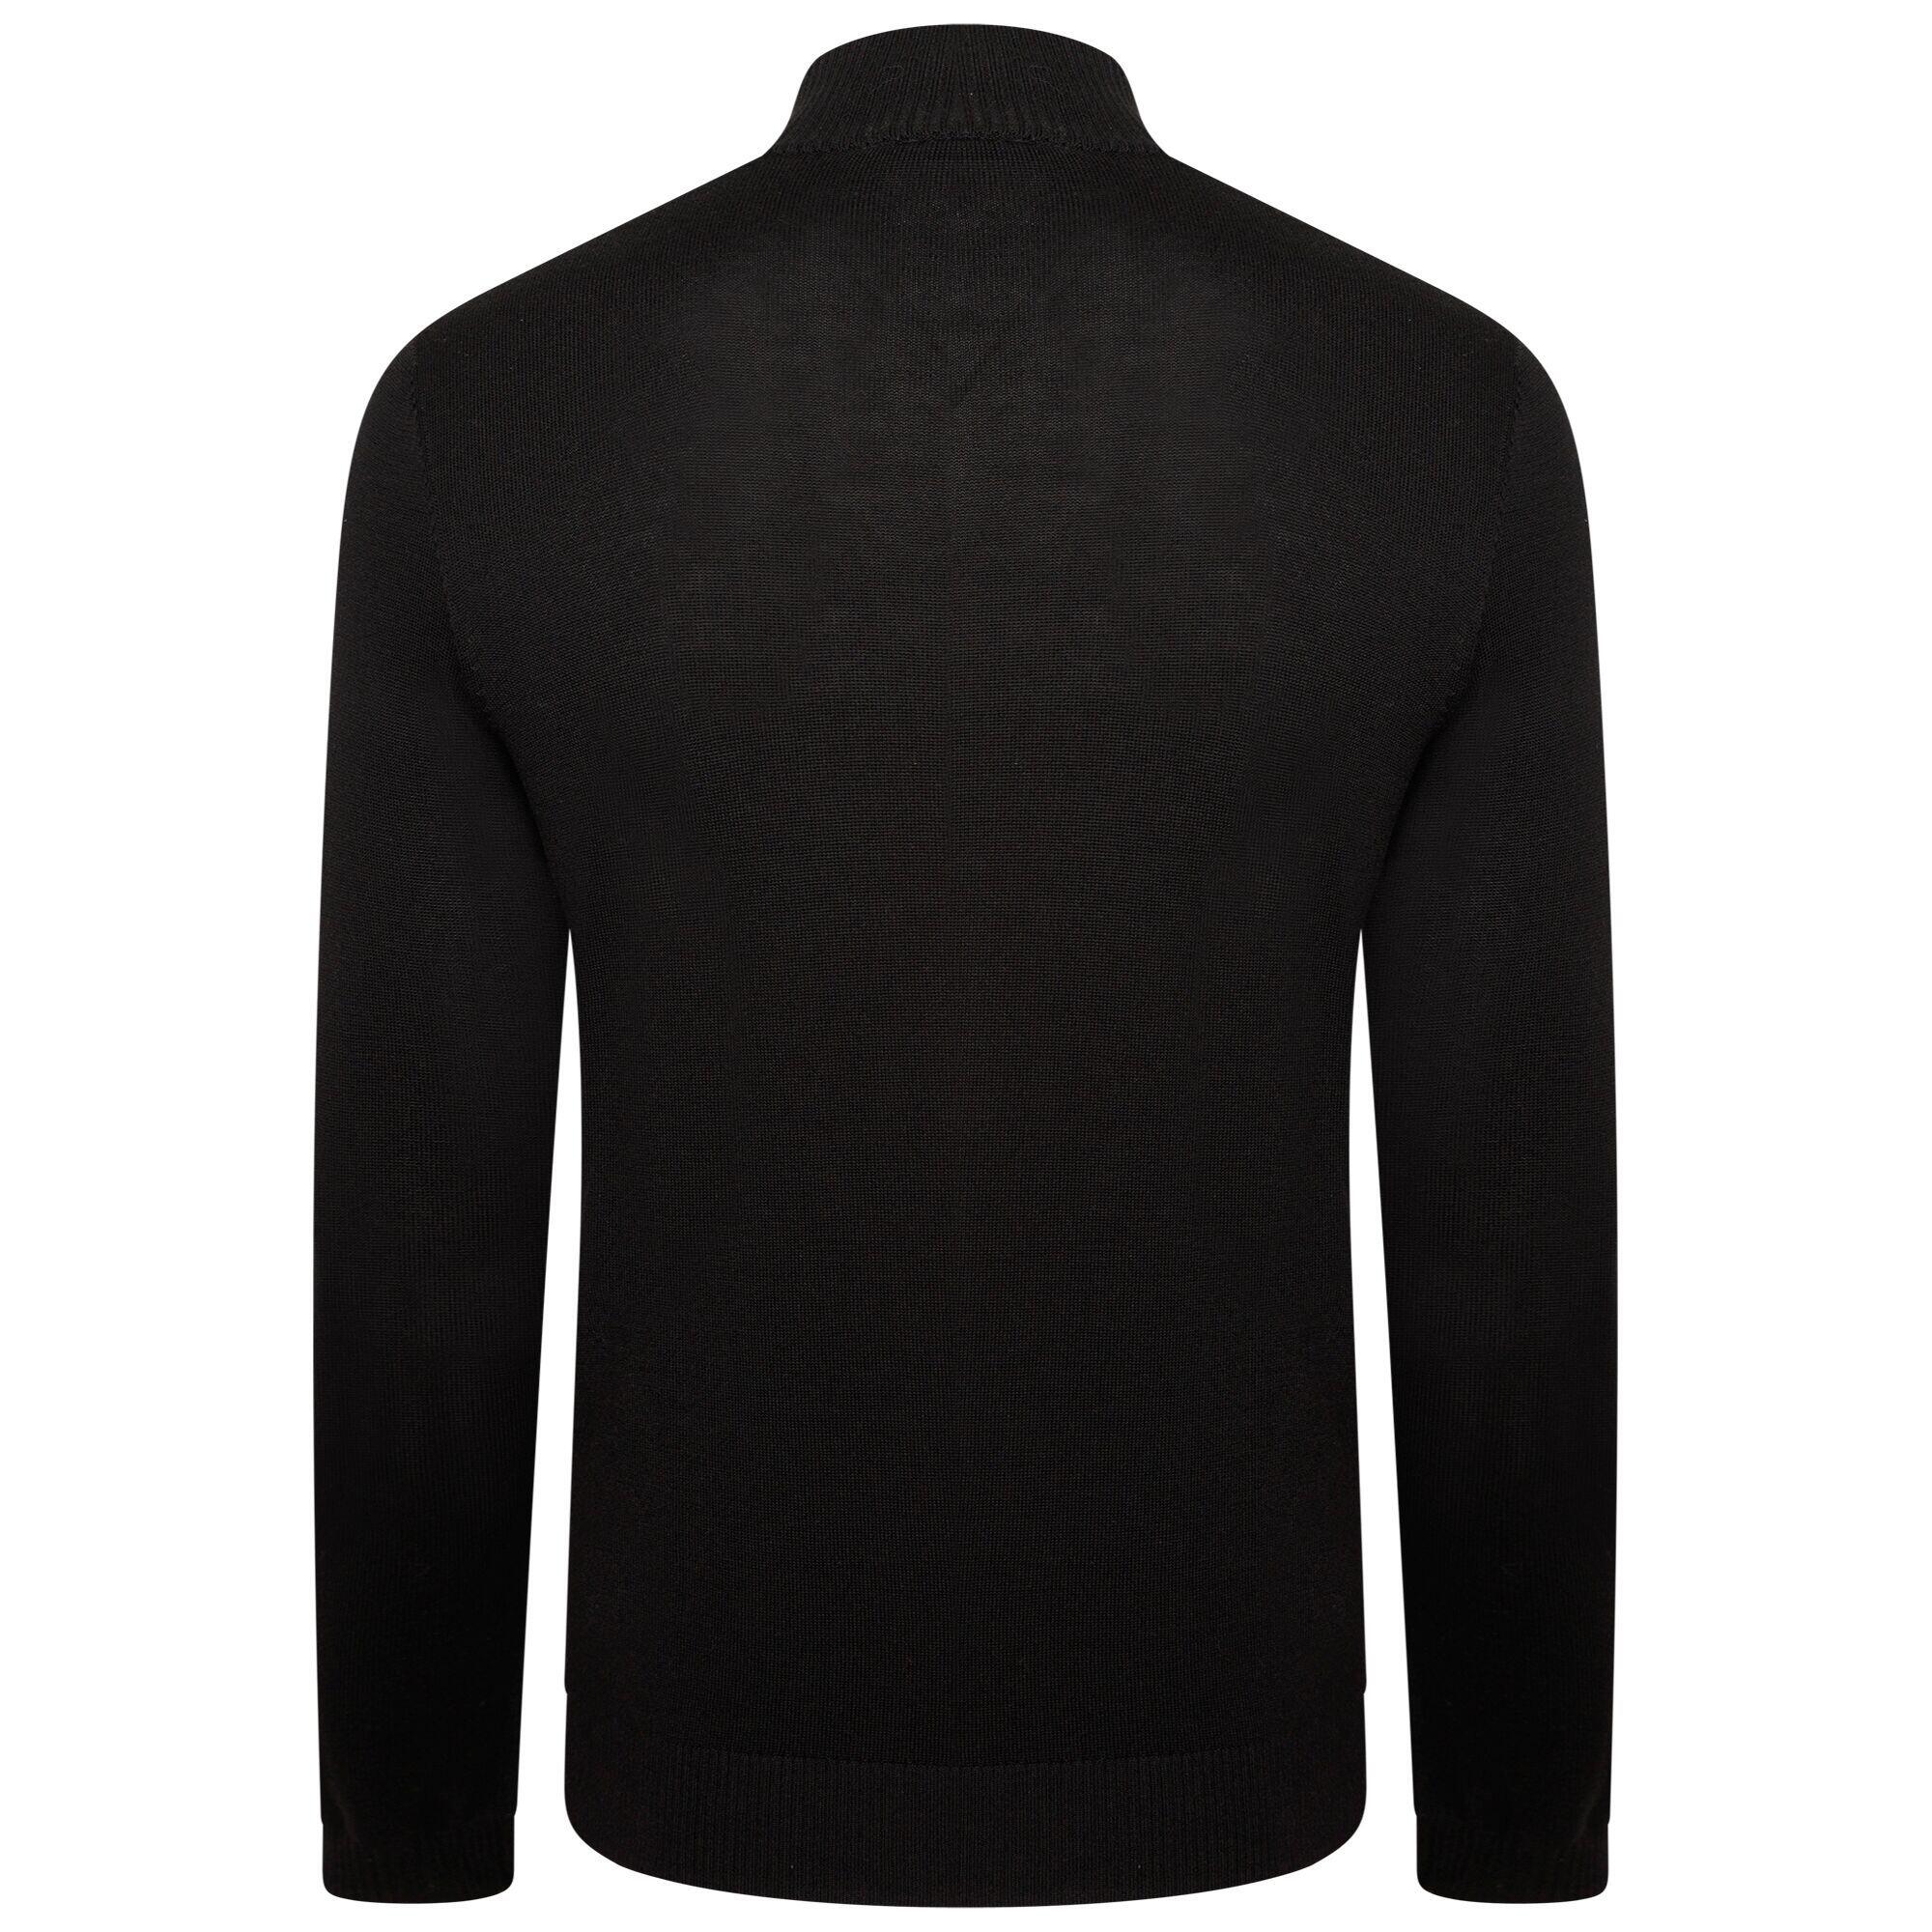 Mens Unite Us Knitted Half Zip Sweatshirt (Black/Amber Glow) 2/5